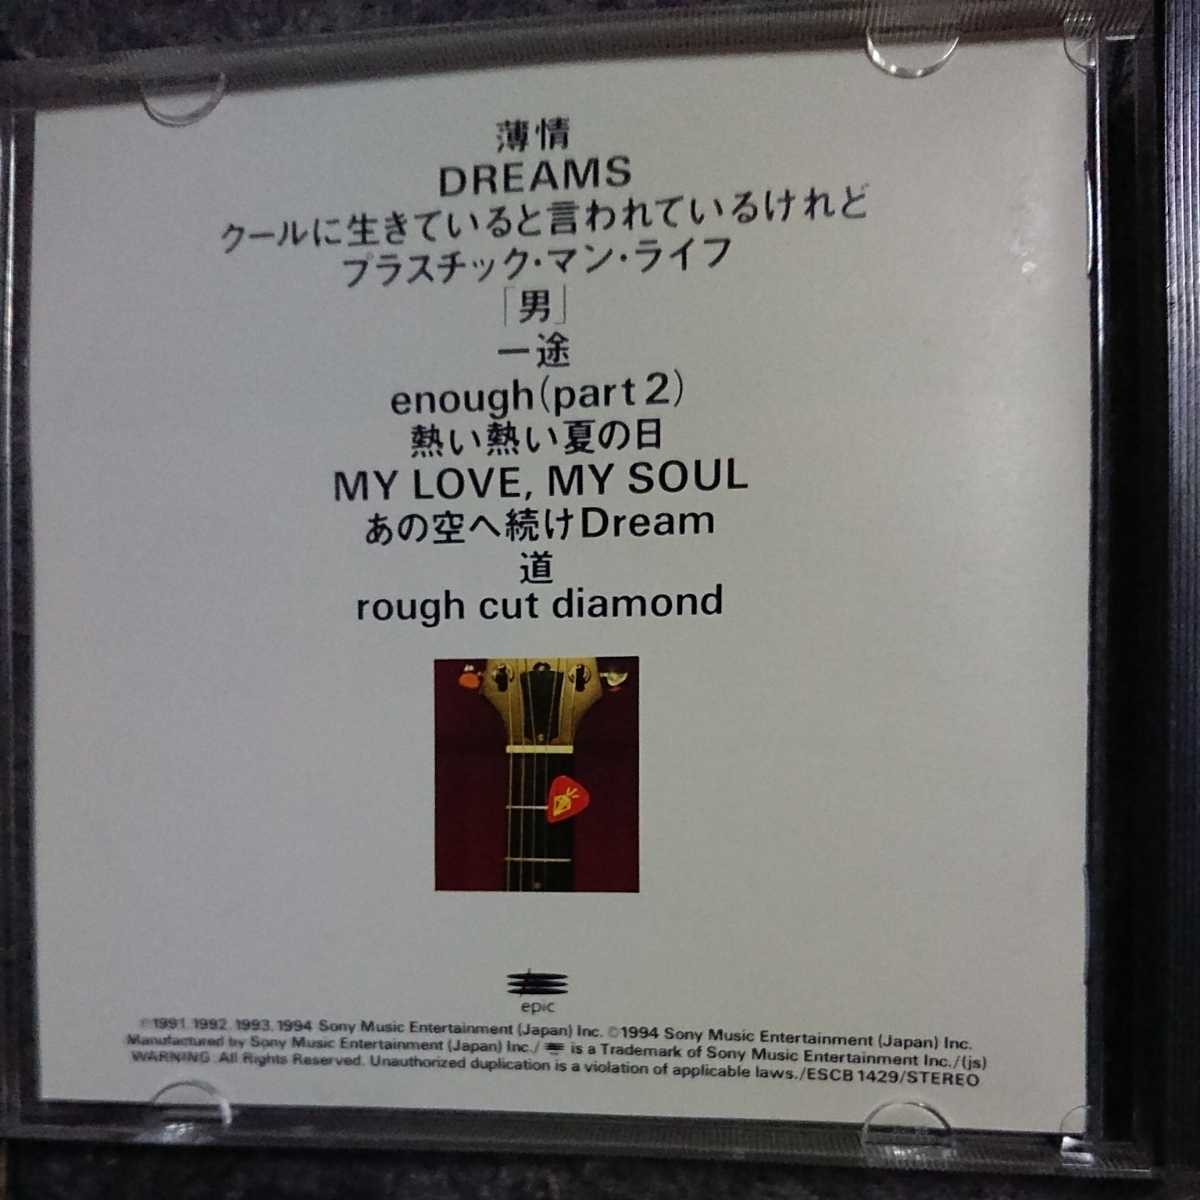  Kubo Ruriko / черновой * cut * бриллиант CD